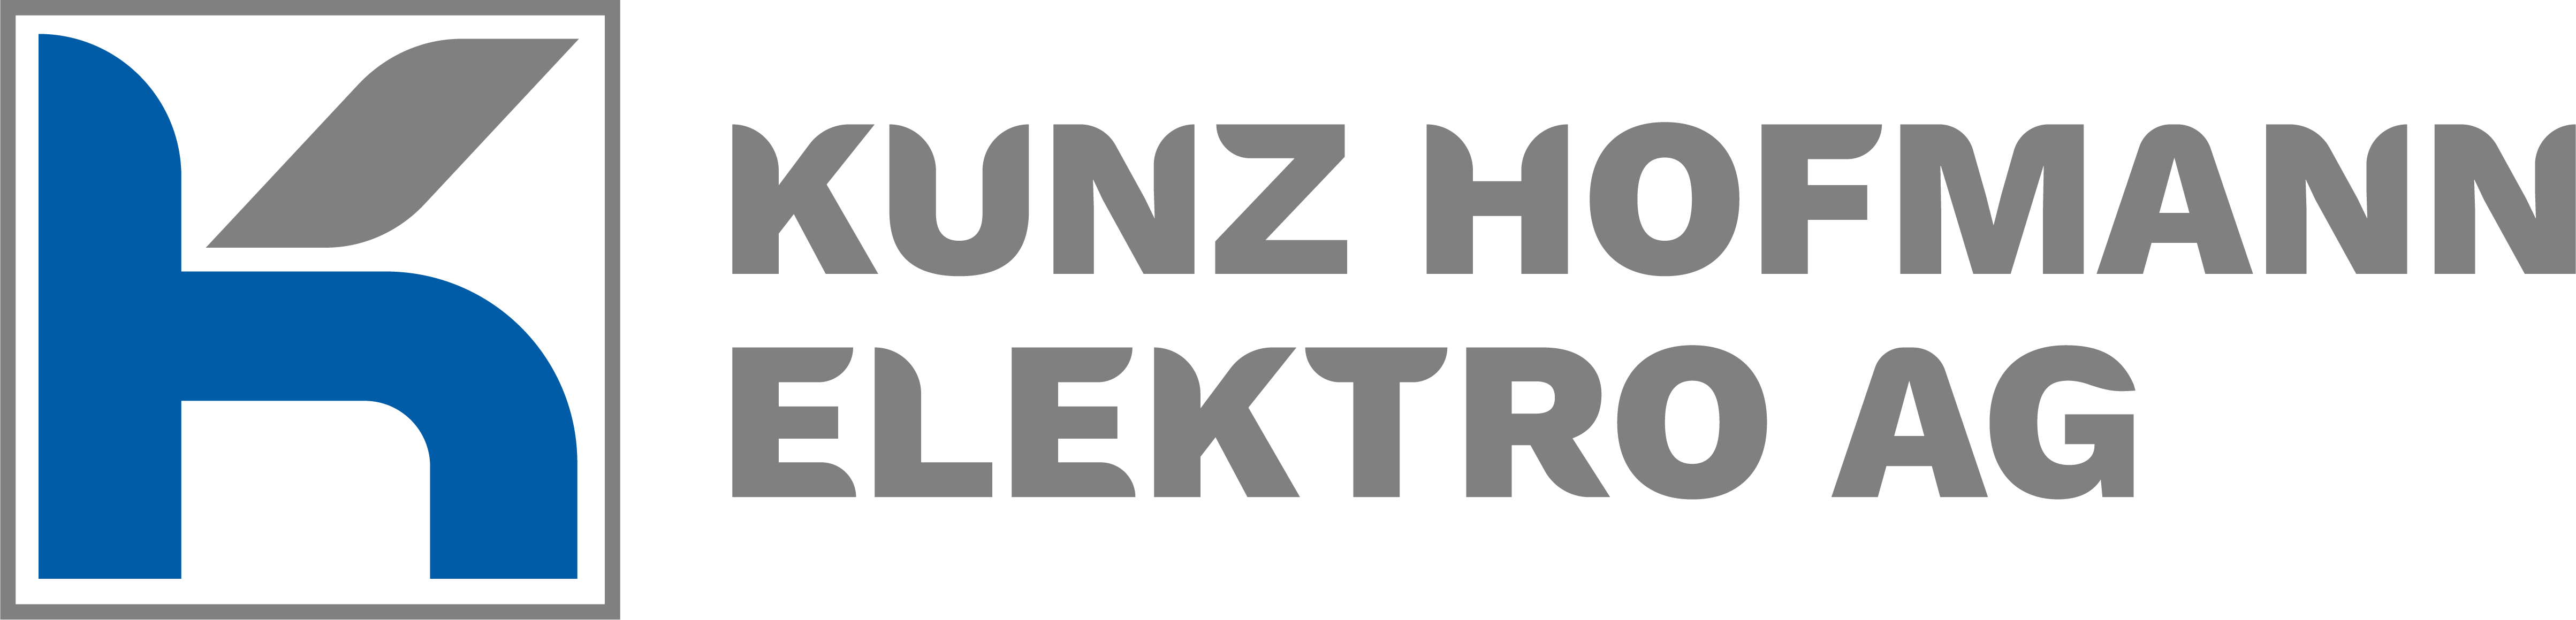 Elektro Ag Kunz Hofmann